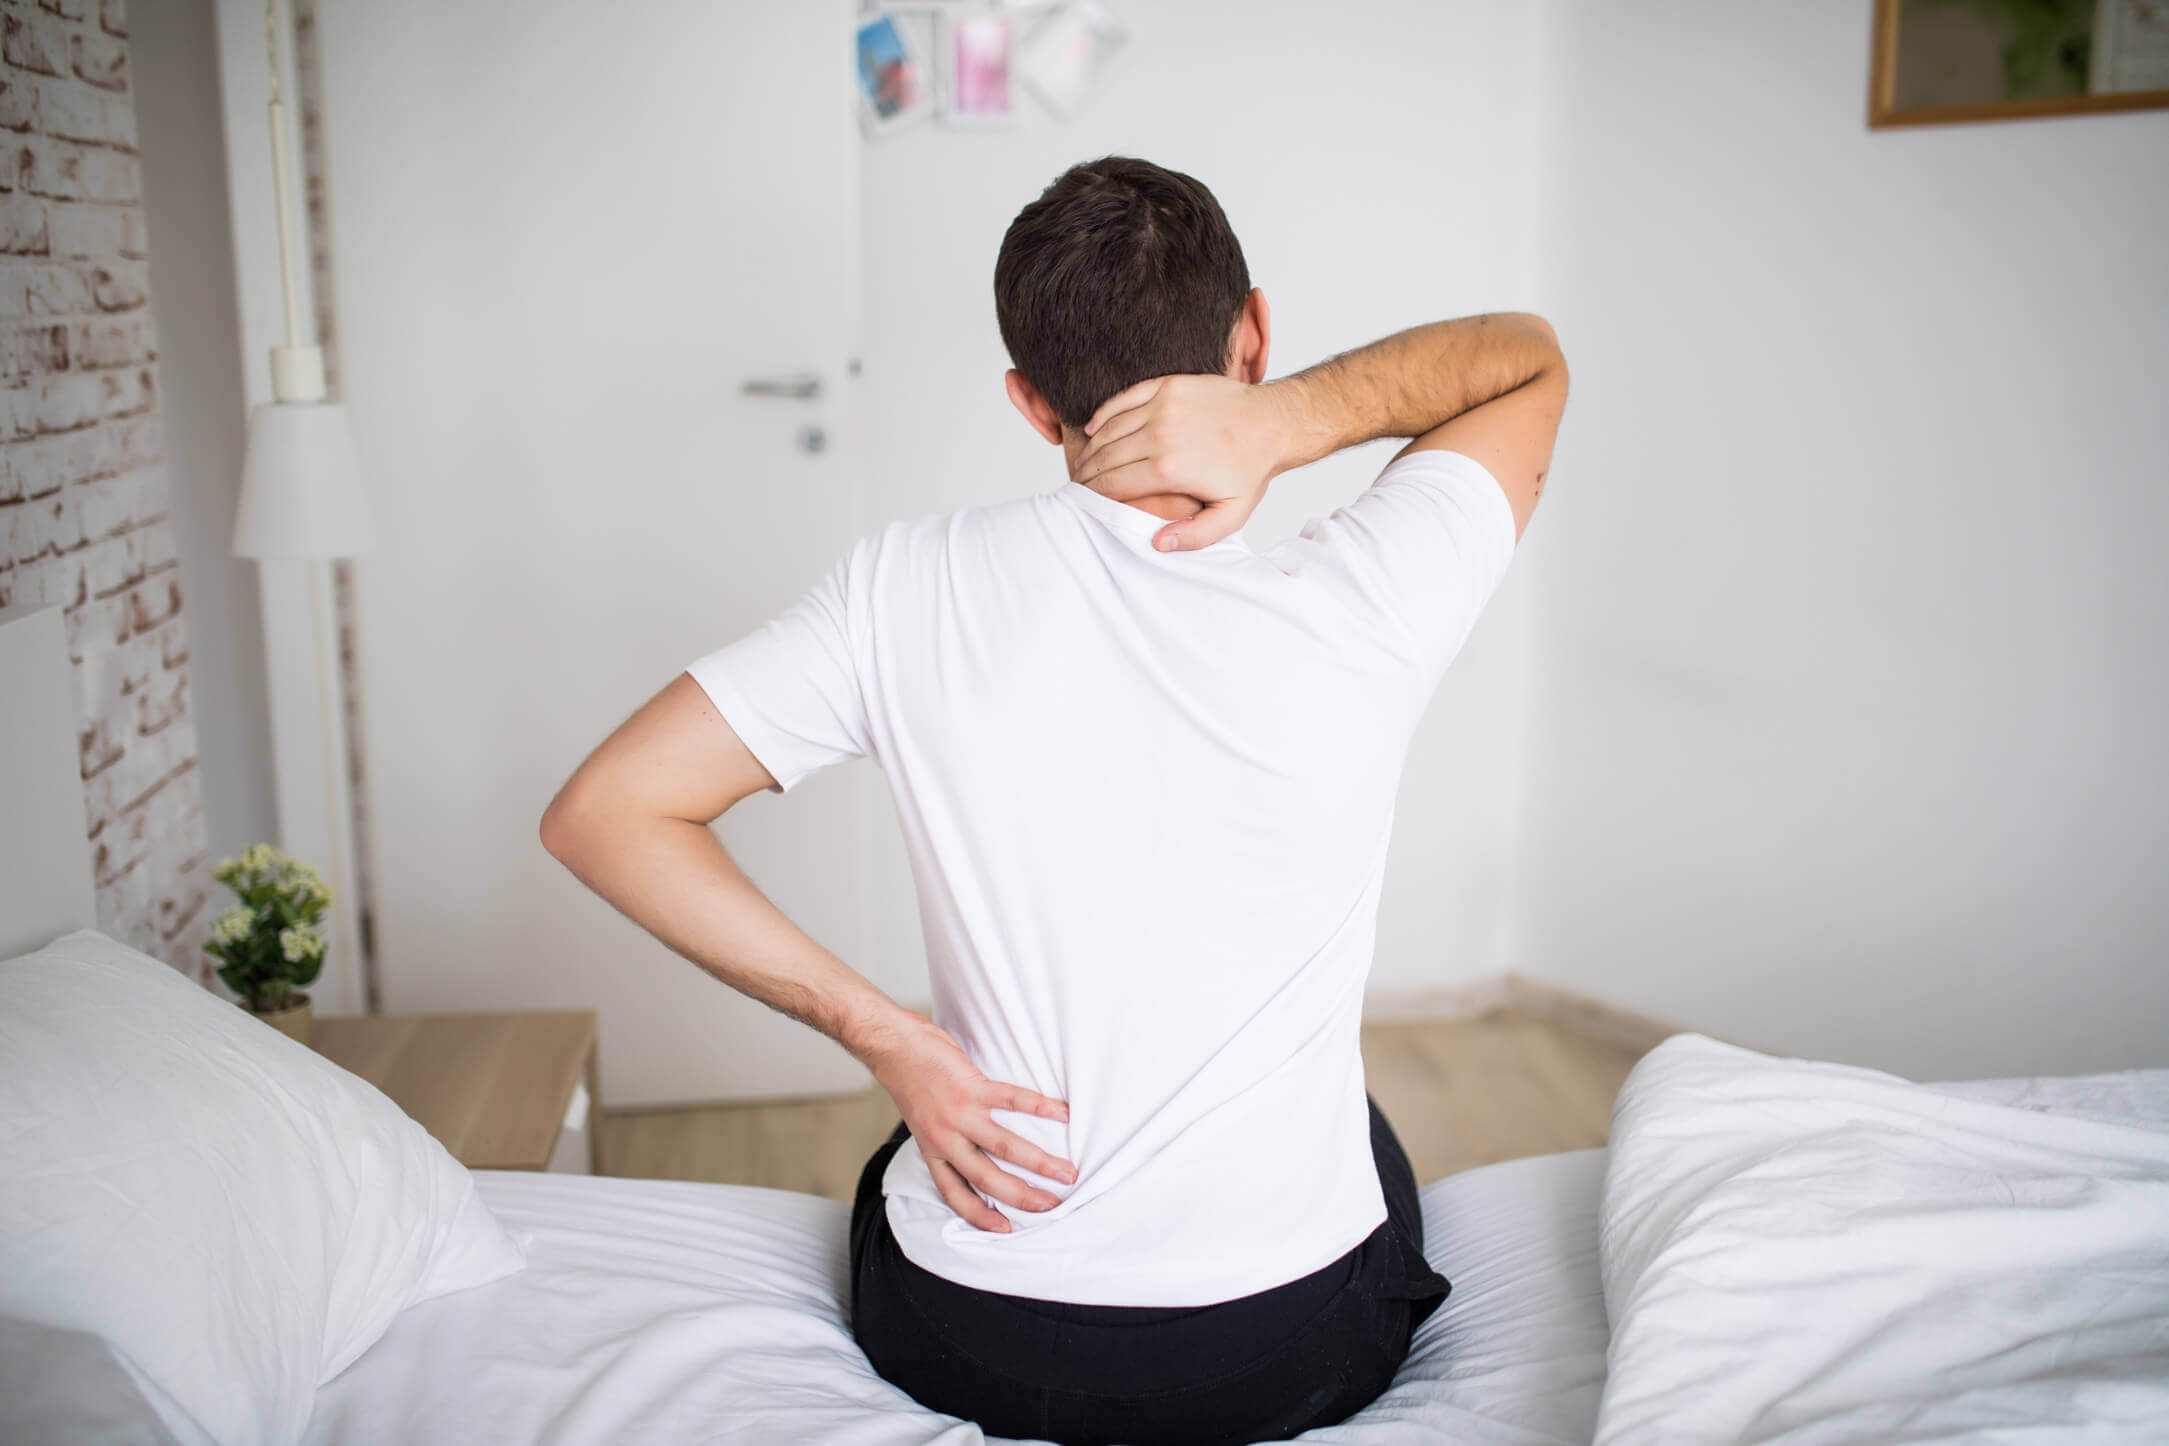 Back Pain & Sleeping: How Adjustable Beds Help